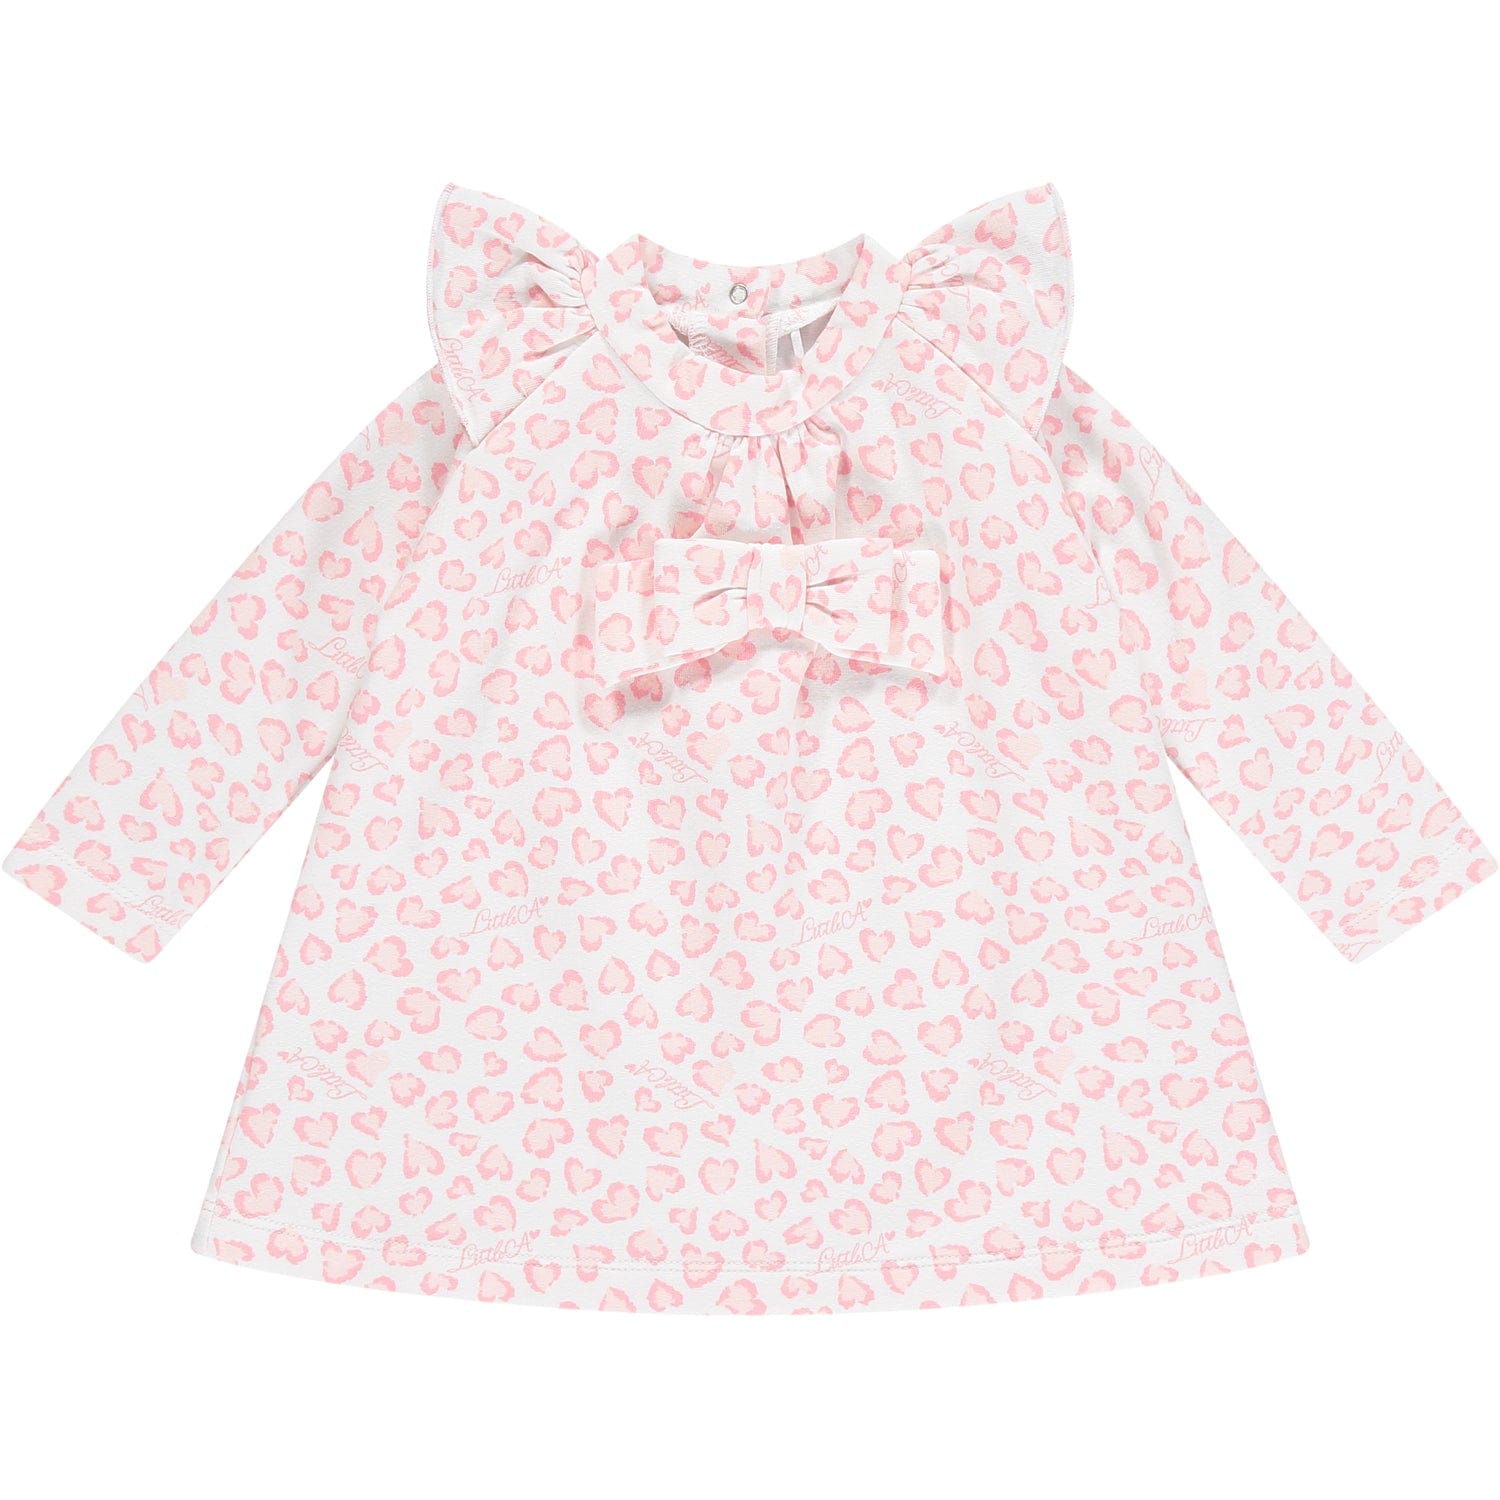 LITTLE A - Estella Leopard Print Dress - Baby Pink